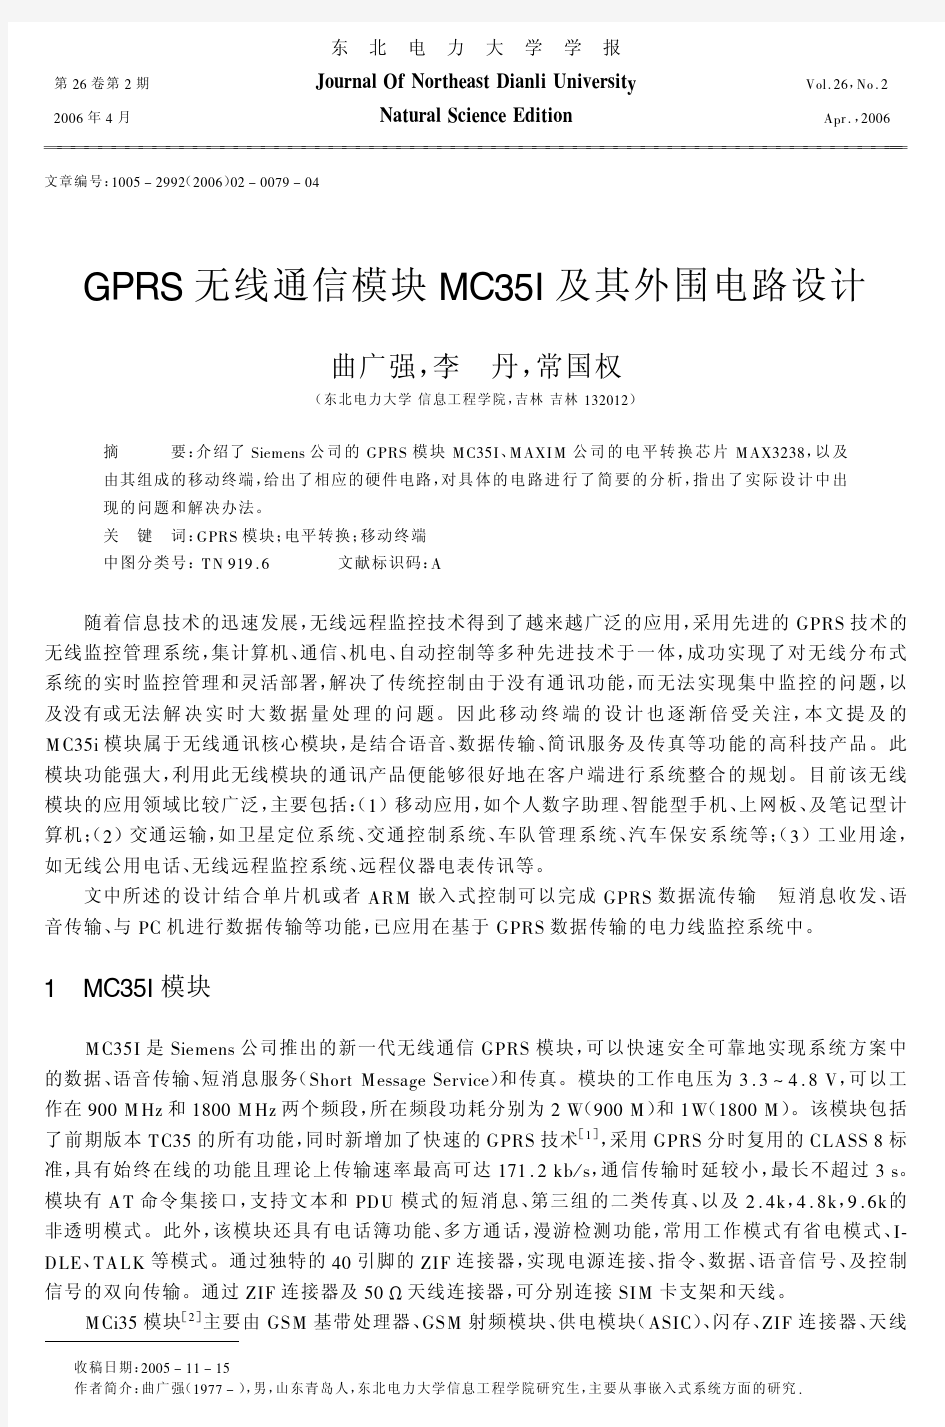 GPRS无线通信模块MC35I及其外围电路设计